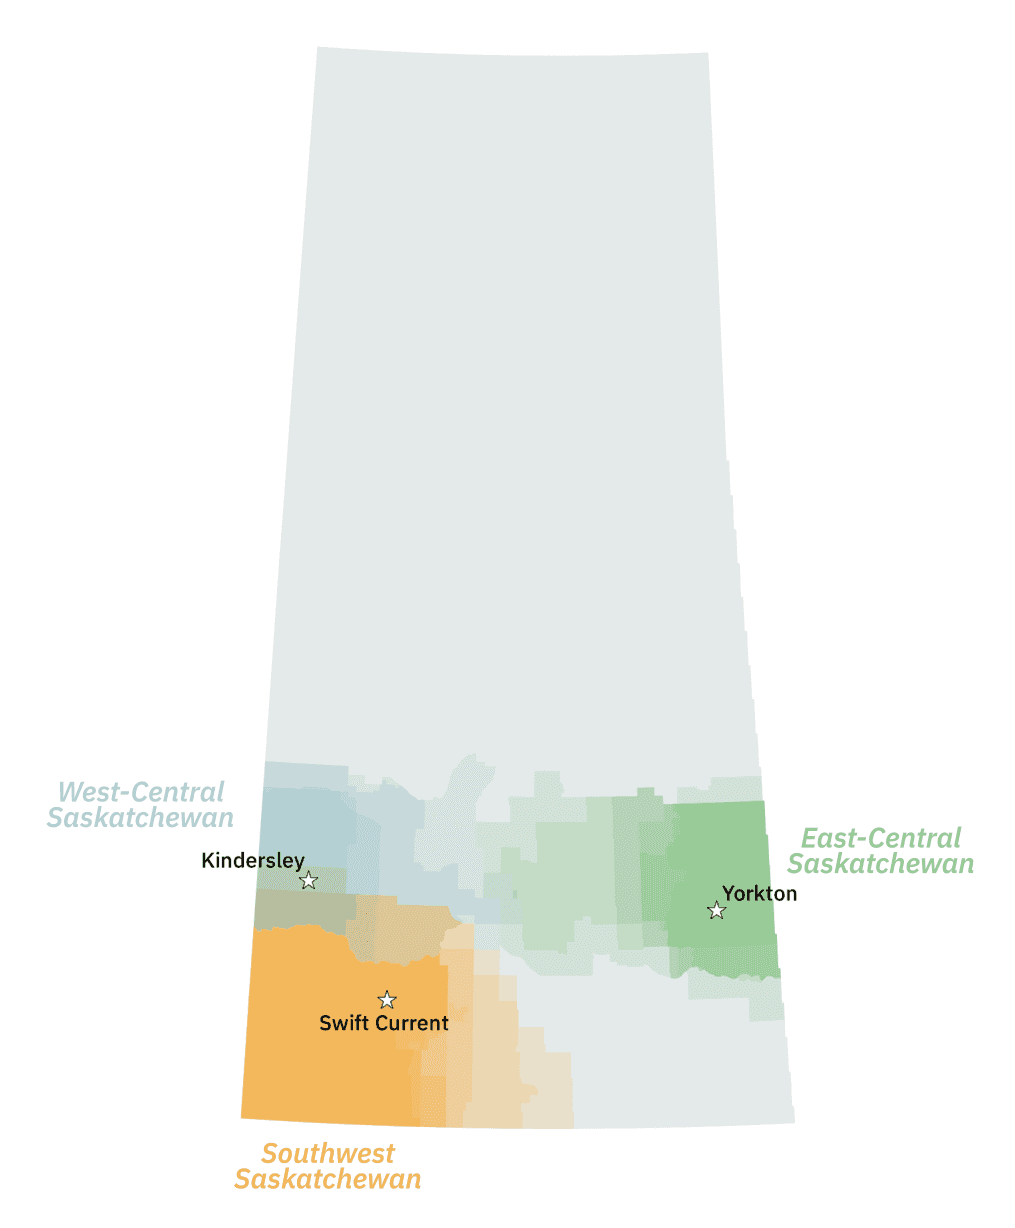 A map of informal cultural regions in Saskatchewan.